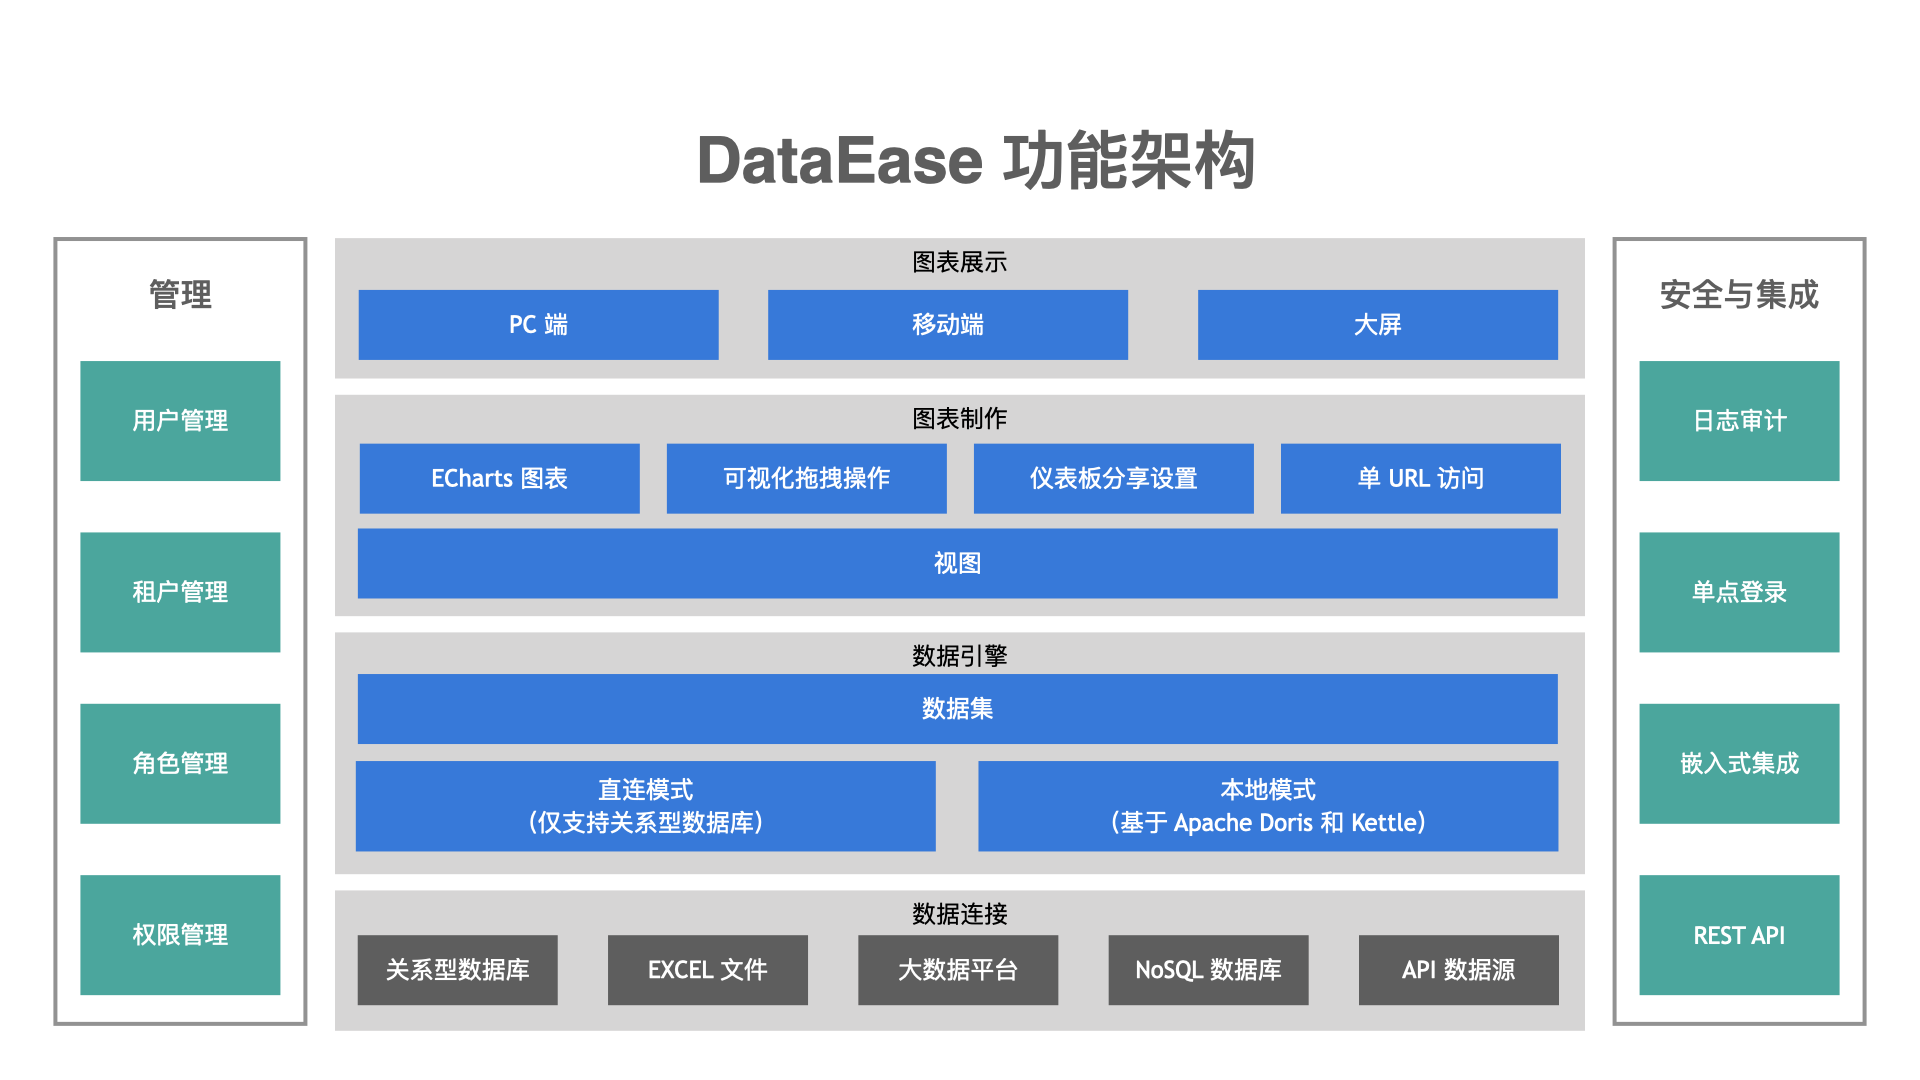 FIT2CLOUD 飞致云开源 DataEase 数据可视化分析平台